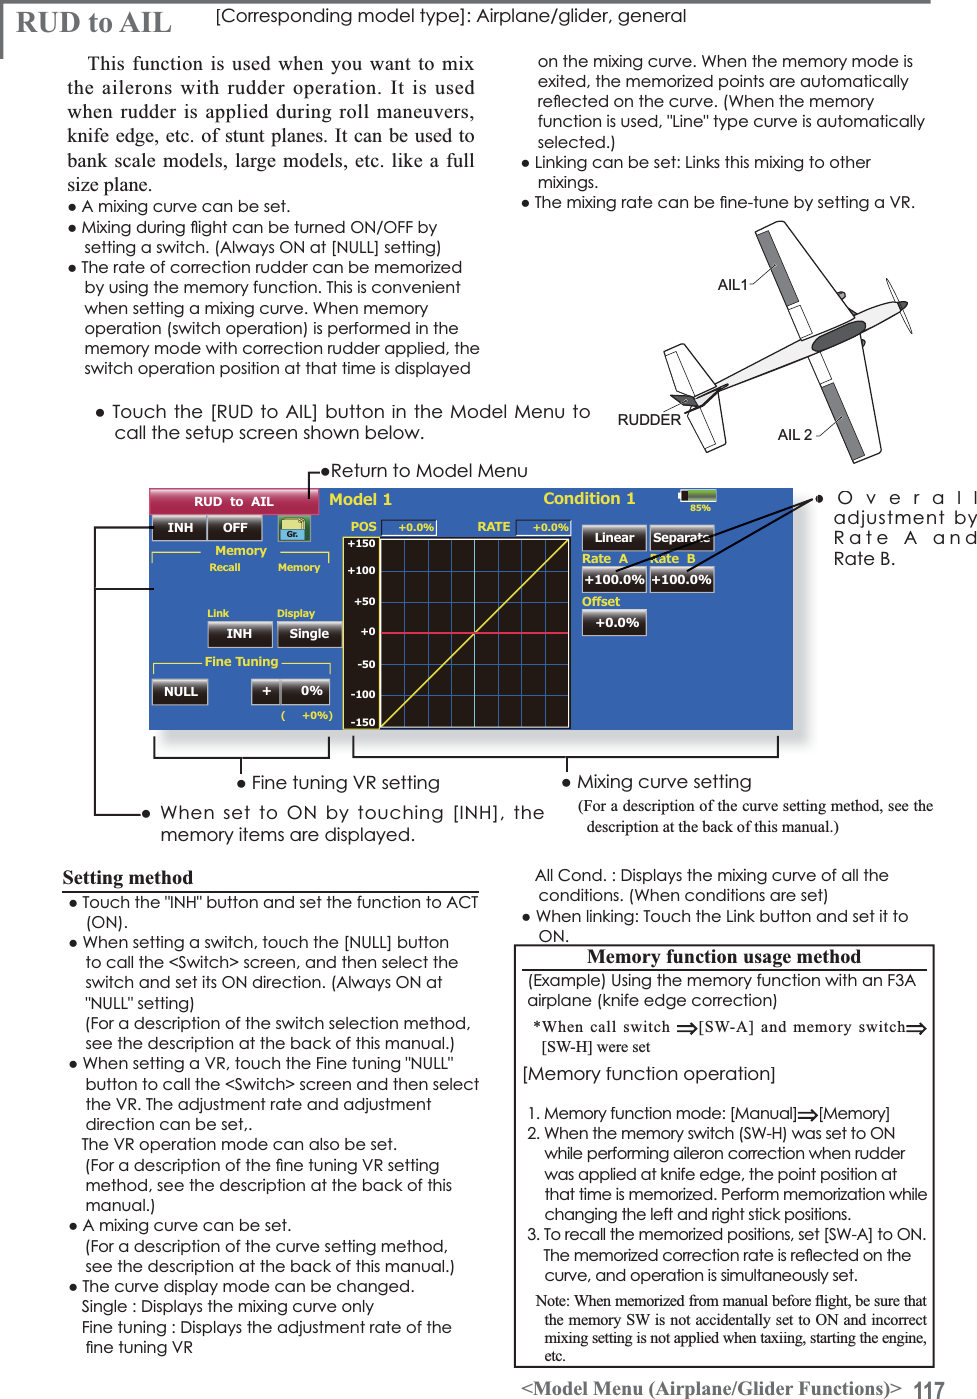 117&lt;Model Menu (Airplane/Glider Functions)&gt;RUDDERAIL1AIL 285%RUD  to  AILINH OFF POS +0.0%(     +0%)Linear Separate+100.0% +100.0%Model 1 Condition 1Gr.+150+100+50+0-50-150-100RATERate  A+0.0%2íVHWRate  B+0.0%&apos;LVSOD\SingleLinkINHNULL +0%0HPRU\0HPRU\RecallFine Tuningŏ5HWXUQWR0RGHO0HQXRUD to AIL&gt;&amp;RUUHVSRQGLQJPRGHOW\SH@$LUSODQHJOLGHUJHQHUDOThis function is used when you want to mixthe ailerons with rudder operation. It is used when rudder is applied during roll maneuvers, knife edge, etc. of stunt planes. It can be used tobank scale models, large models, etc. like a fullsize plane.ŏ$PL[LQJFXUYHFDQEHVHWŏ0L[LQJGXULQJÁLJKWFDQEHWXUQHG212))E\VHWWLQJDVZLWFK$OZD\V21DW&gt;18//@VHWWLQJŏ7KHUDWHRIFRUUHFWLRQUXGGHUFDQEHPHPRUL]HGby using the memory function. This is convenient ZKHQVHWWLQJDPL[LQJFXUYH:KHQPHPRU\operation (switch operation) is performed in the memory mode with correction rudder applied, the switch operation position at that time is displayed ŏ7RXFKWKH&gt;58&apos;WR$,/@EXWWRQLQWKH0RGHO0HQXWRcall the setup screen shown below.ŏ0L[LQJFXUYHVHWWLQJ(For a description of the curve setting method, see the description at the back of this manual.)ŏ)LQHWXQLQJ95VHWWLQJŏ:KHQVHWWR21E\WRXFKLQJ&gt;,1+@WKHmemory items are displayed.ŏ2YHUDOOadjustment by5DWH$DQG5DWH%RQWKHPL[LQJFXUYH:KHQWKHPHPRU\PRGHLVexited, the memorized points are automatically UHÁHFWHGRQWKHFXUYH:KHQWKHPHPRU\IXQFWLRQLVXVHG/LQHW\SHFXUYHLVDXWRPDWLFDOO\selected.)ŏ/LQNLQJFDQEHVHW/LQNVWKLVPL[LQJWRRWKHUmixings.ŏ7KHPL[LQJUDWHFDQEHÀQHWXQHE\VHWWLQJD956HWWLQJPHWKRGŏ7RXFKWKH,1+EXWWRQDQGVHWWKHIXQFWLRQWR$&amp;721ŏ:KHQVHWWLQJDVZLWFKWRXFKWKH&gt;18//@EXWWRQto call the &lt;Switch&gt; screen, and then select the VZLWFKDQGVHWLWV21GLUHFWLRQ$OZD\V21DW18//VHWWLQJ(For a description of the switch selection method, see the description at the back of this manual.)ŏ:KHQVHWWLQJD95WRXFKWKH)LQHWXQLQJ18//button to call the &lt;Switch&gt; screen and then select WKH957KHDGMXVWPHQWUDWHDQGDGMXVWPHQWdirection can be set,.7KH95RSHUDWLRQPRGHFDQDOVREHVHW)RUDGHVFULSWLRQRIWKHÀQHWXQLQJ95VHWWLQJmethod, see the description at the back of this manual.)ŏ$PL[LQJFXUYHFDQEHVHW(For a description of the curve setting method, see the description at the back of this manual.)ŏ7KHFXUYHGLVSOD\PRGHFDQEHFKDQJHG6LQJOH&apos;LVSOD\VWKHPL[LQJFXUYHRQO\)LQHWXQLQJ&apos;LVSOD\VWKHDGMXVWPHQWUDWHRIWKHÀQHWXQLQJ95$OO&amp;RQG&apos;LVSOD\VWKHPL[LQJFXUYHRIDOOWKHFRQGLWLRQV:KHQFRQGLWLRQVDUHVHWŏ:KHQOLQNLQJ7RXFKWKH/LQNEXWWRQDQGVHWLWWR210HPRU\IXQFWLRQXVDJHPHWKRG([DPSOH8VLQJWKHPHPRU\IXQFWLRQZLWKDQ)$airplane (knife edge correction)*When call switch[SW-A] and memory switch[SW-H] were set[Memory function operation]1. Memory function mode: [Manual][Memory]:KHQWKHPHPRU\VZLWFK6:+ZDVVHWWR21while performing aileron correction when rudder was applied at knife edge, the point position atthat time is memorized. Perform memorization whilechanging the left and right stick positions.7RUHFDOOWKHPHPRUL]HGSRVLWLRQVVHW&gt;6:$@WR217KHPHPRUL]HGFRUUHFWLRQUDWHLVUHÁHFWHGRQWKHcurve, and operation is simultaneously set.1RWH:KHQPHPRUL]HGIURPPDQXDOEHIRUHÀLJKWEHVXUHWKDWthe memory SW is not accidentally set to ON and incorrect mixing setting is not applied when taxiing, starting the engine, etc.Ra